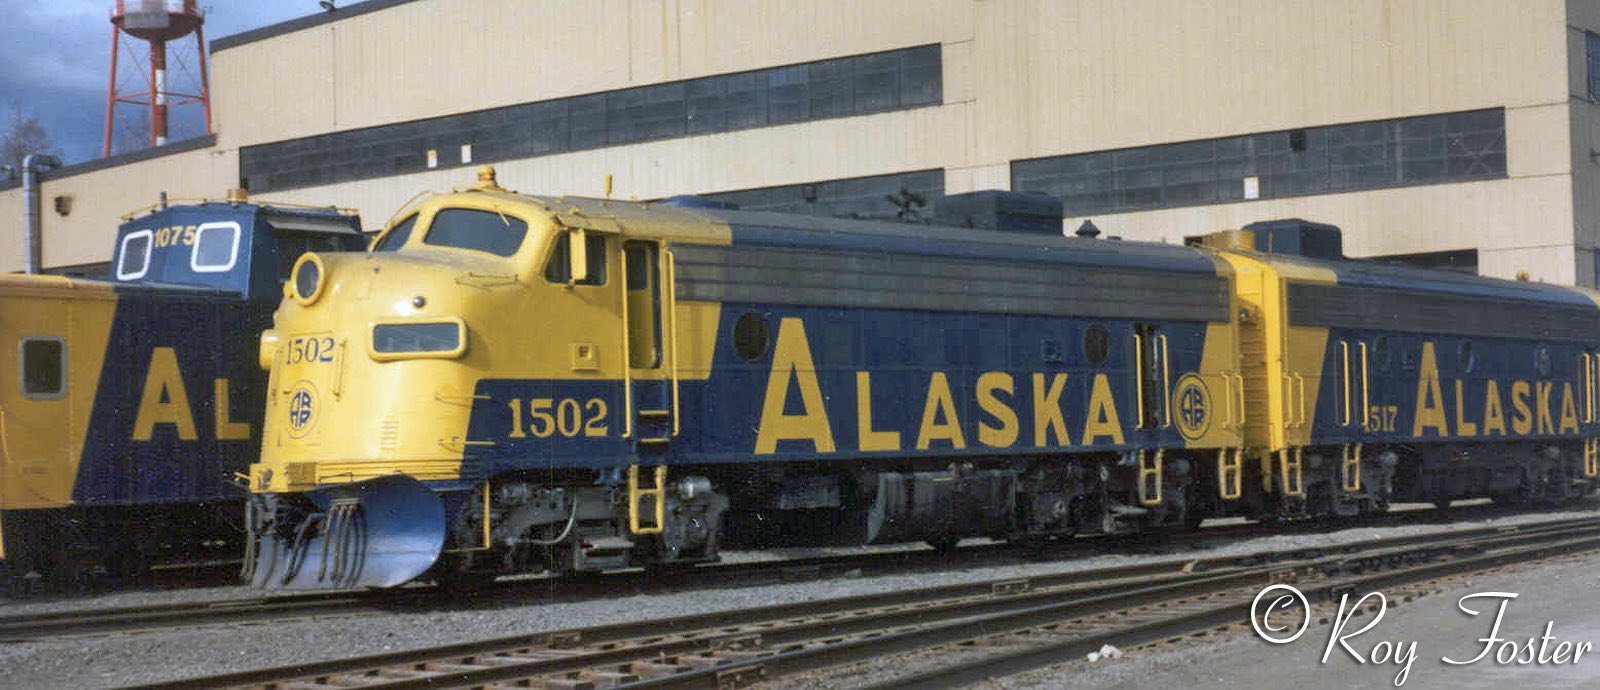 ARR 1502, Anchorage, 6-82